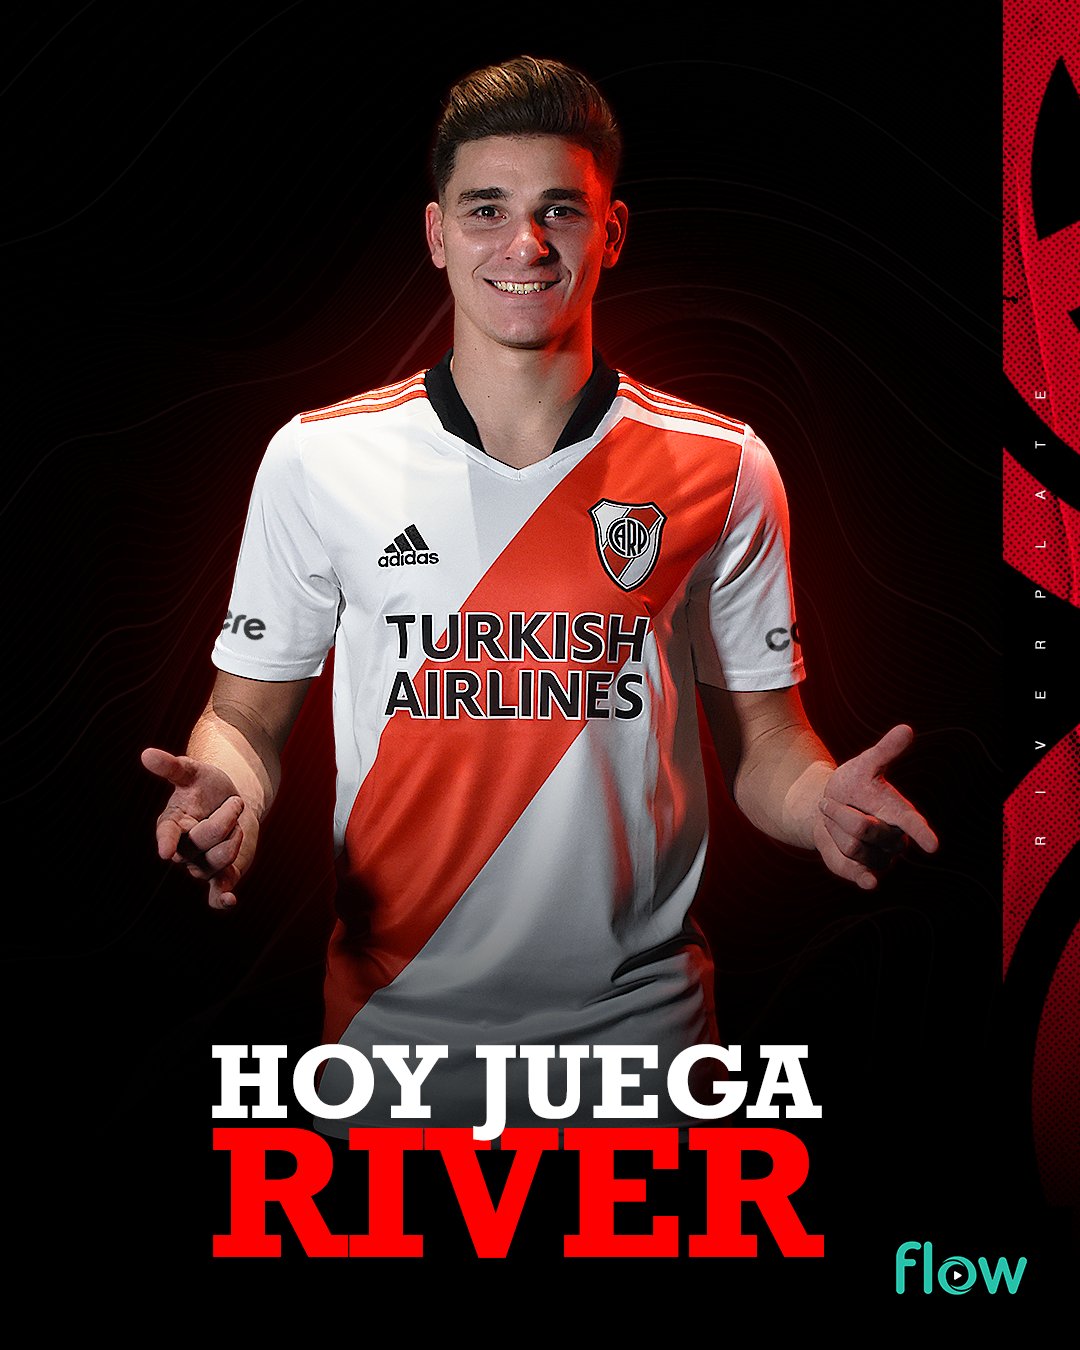 River Plate on Twitter: JUEGA ⚪🔴⚪ https://t.co/zhkKqzP0DW" / Twitter